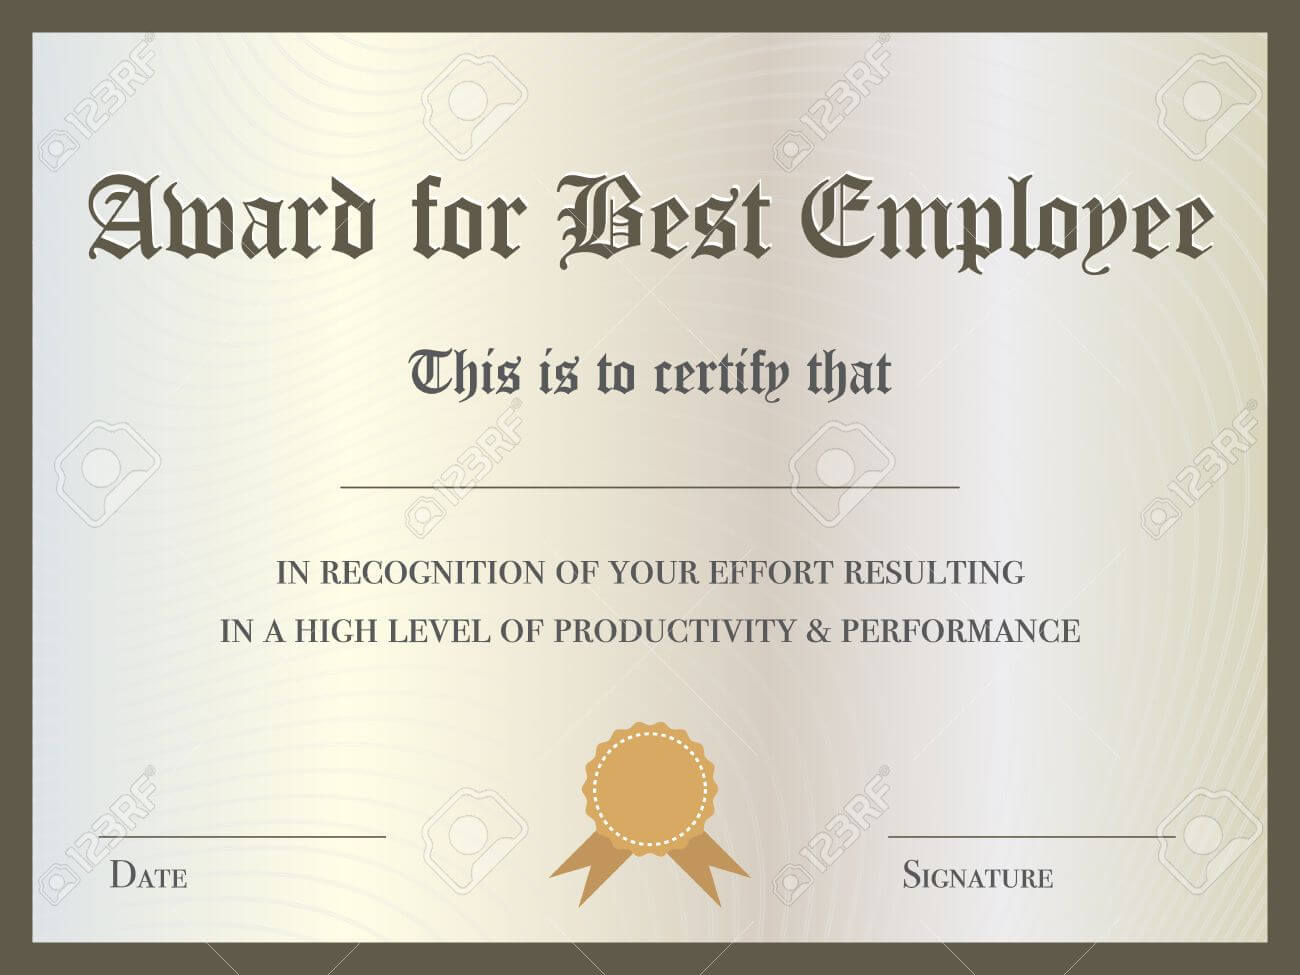 illustration-of-certificate-award-for-best-employee-intended-for-best